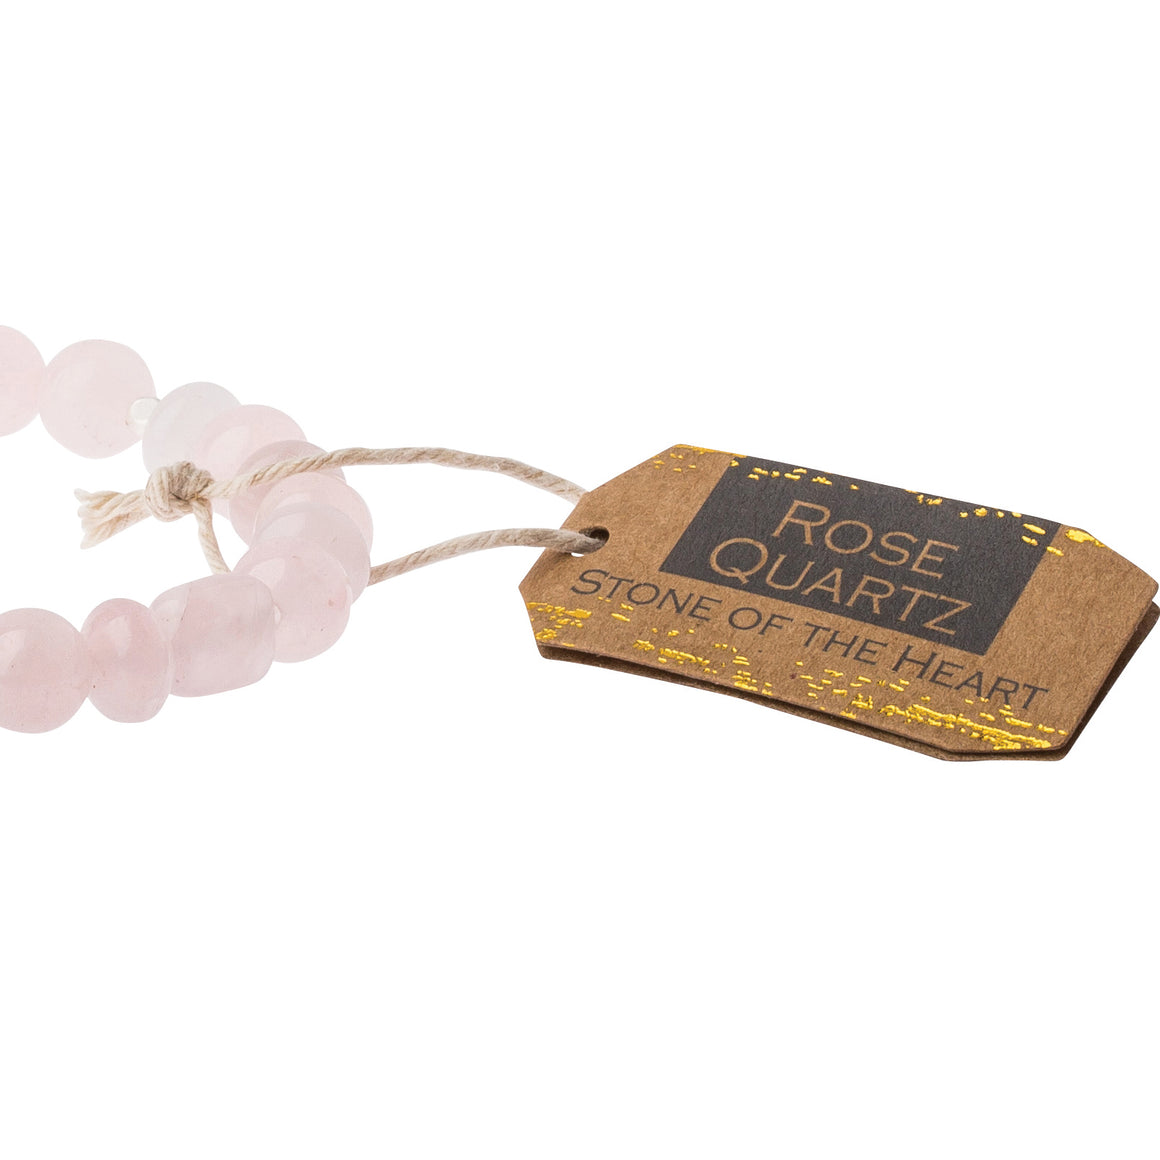 Rose Quartz Stone Bracelet - Stone of the Heart